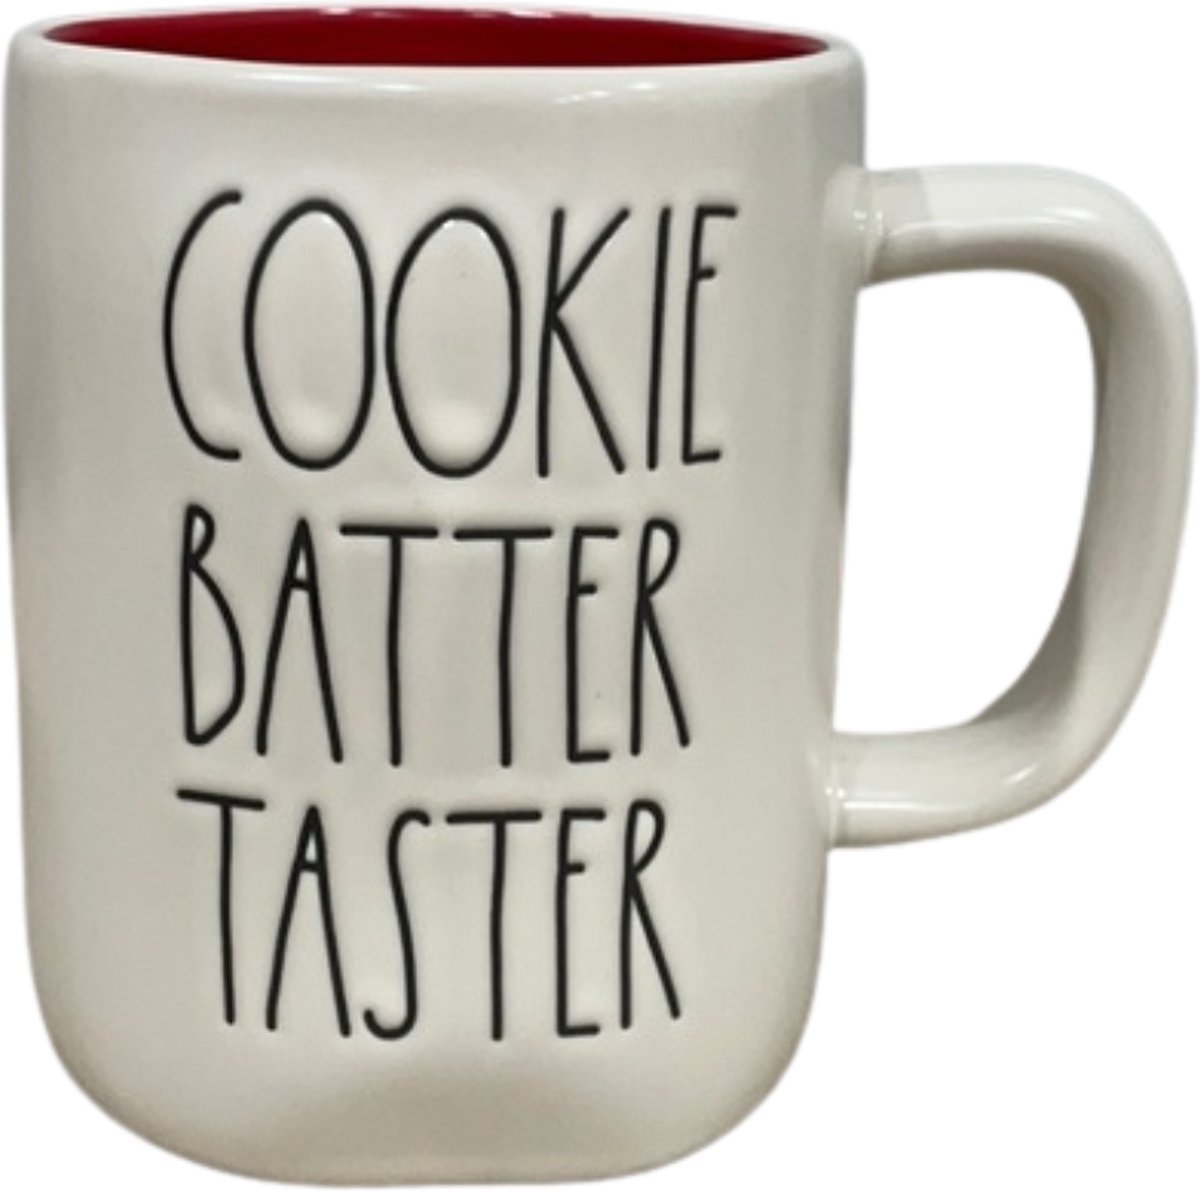 Rae Dunn - mok - beker - cookie batter taster - decoratie - kerstkado- theemok - bakken - koffiemok - kerstmokken - mok met tekst - grote mok - kerstmok - kerst